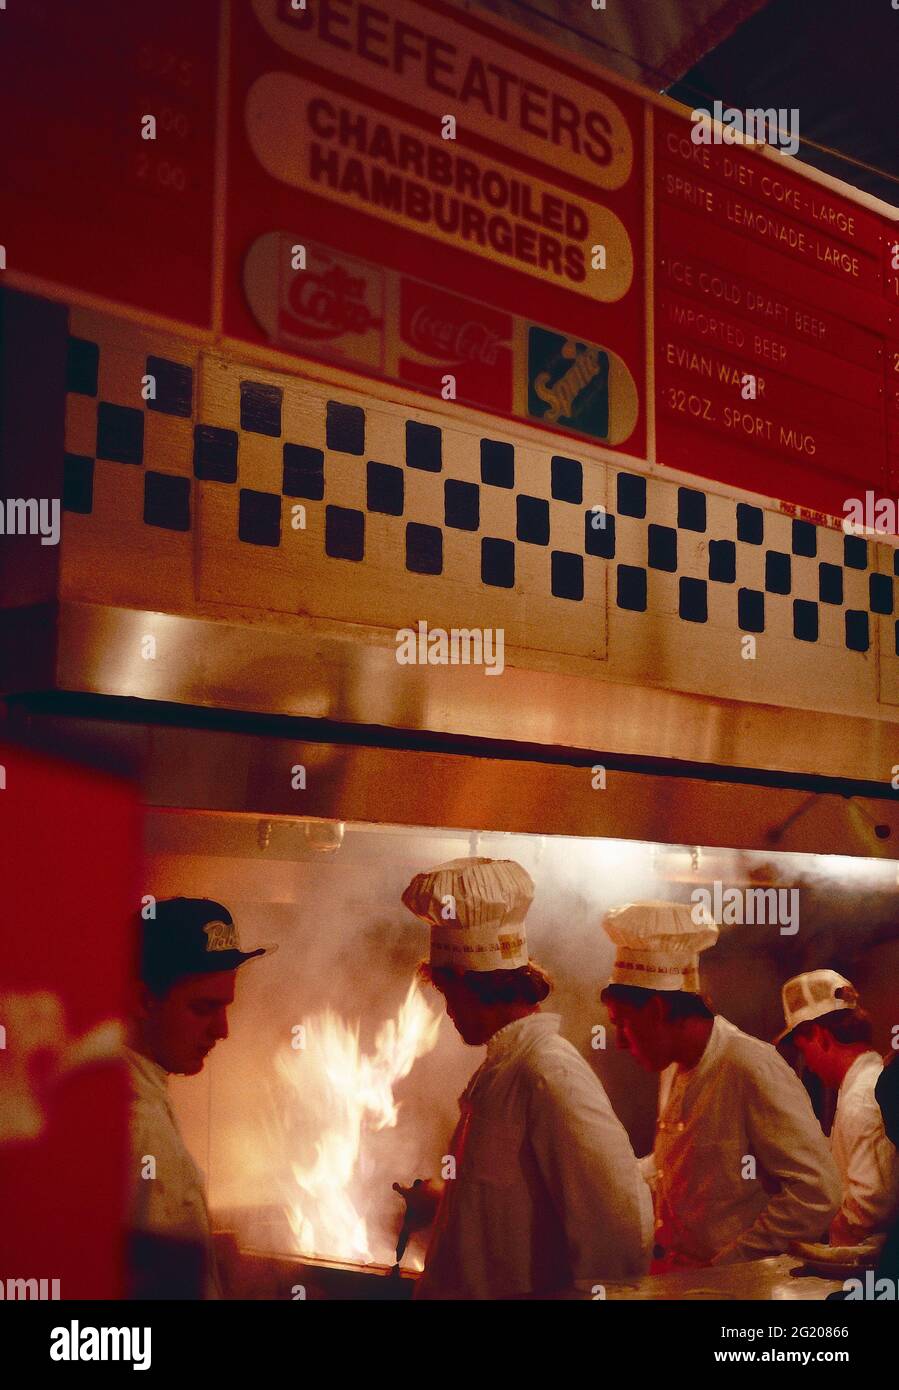 Cooking hamburgers, USA 1993 Stock Photo